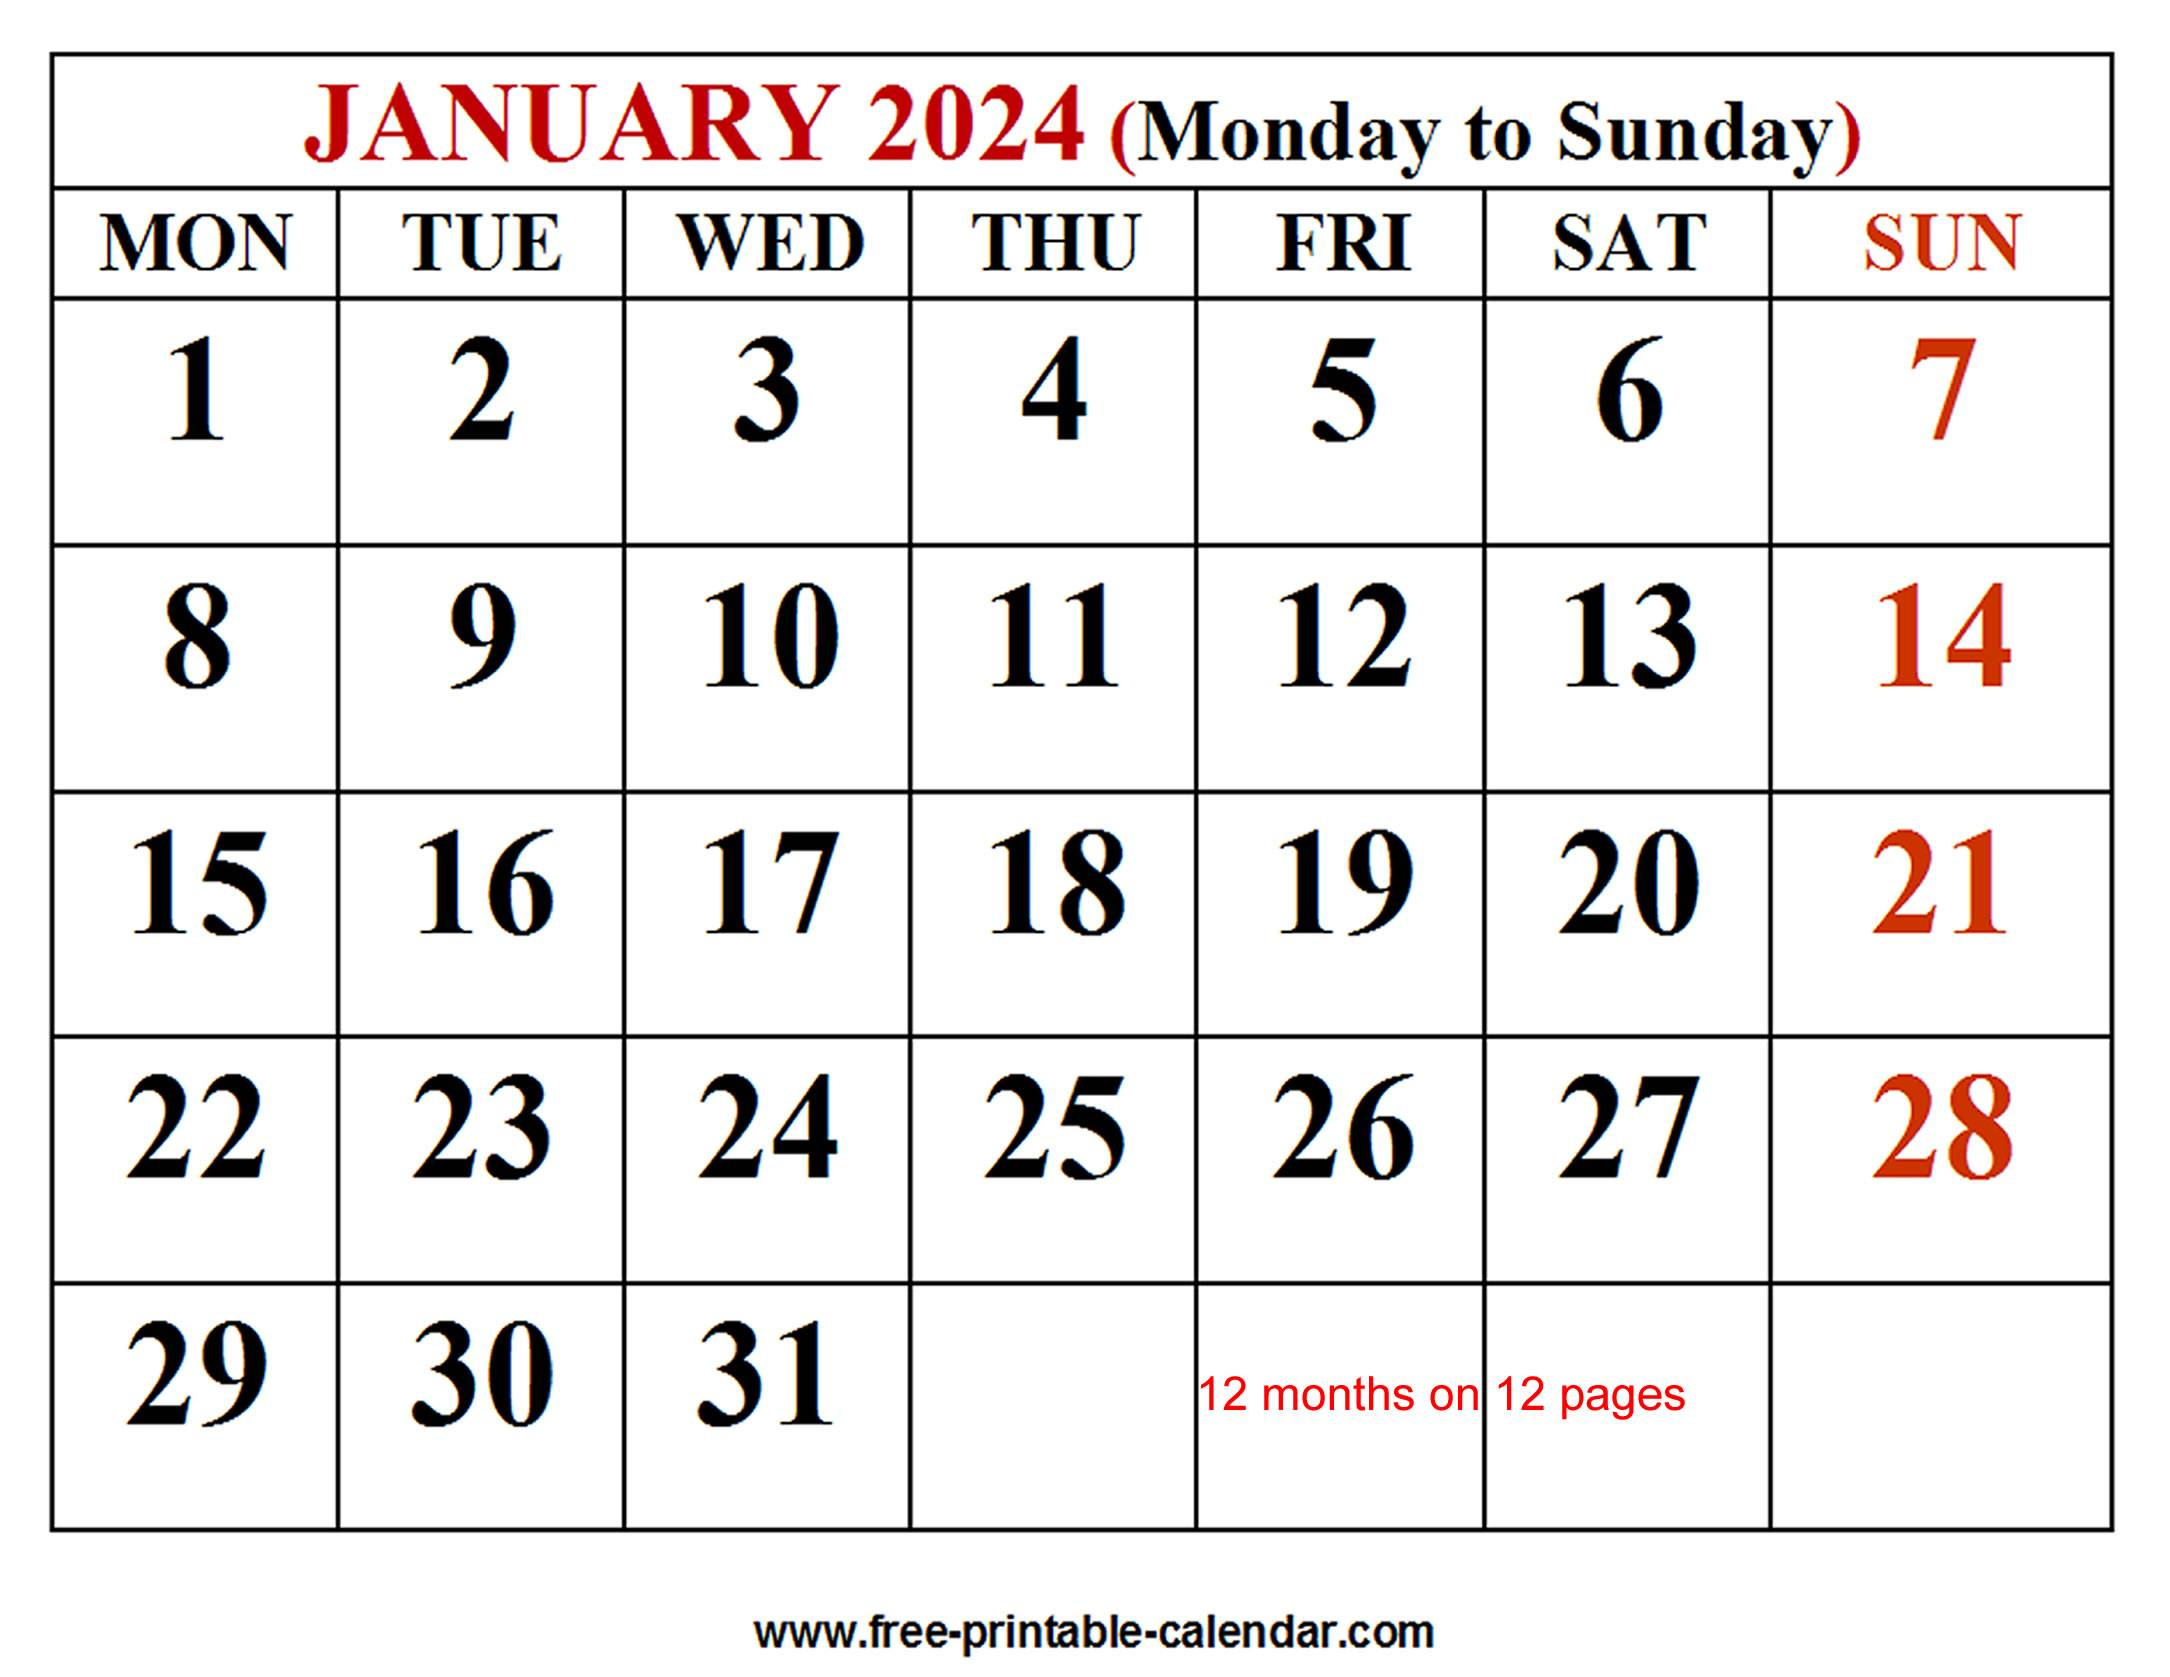 2024 Calendar Template - Free-Printable-Calendar | Free Editable Printable Calendar 2024